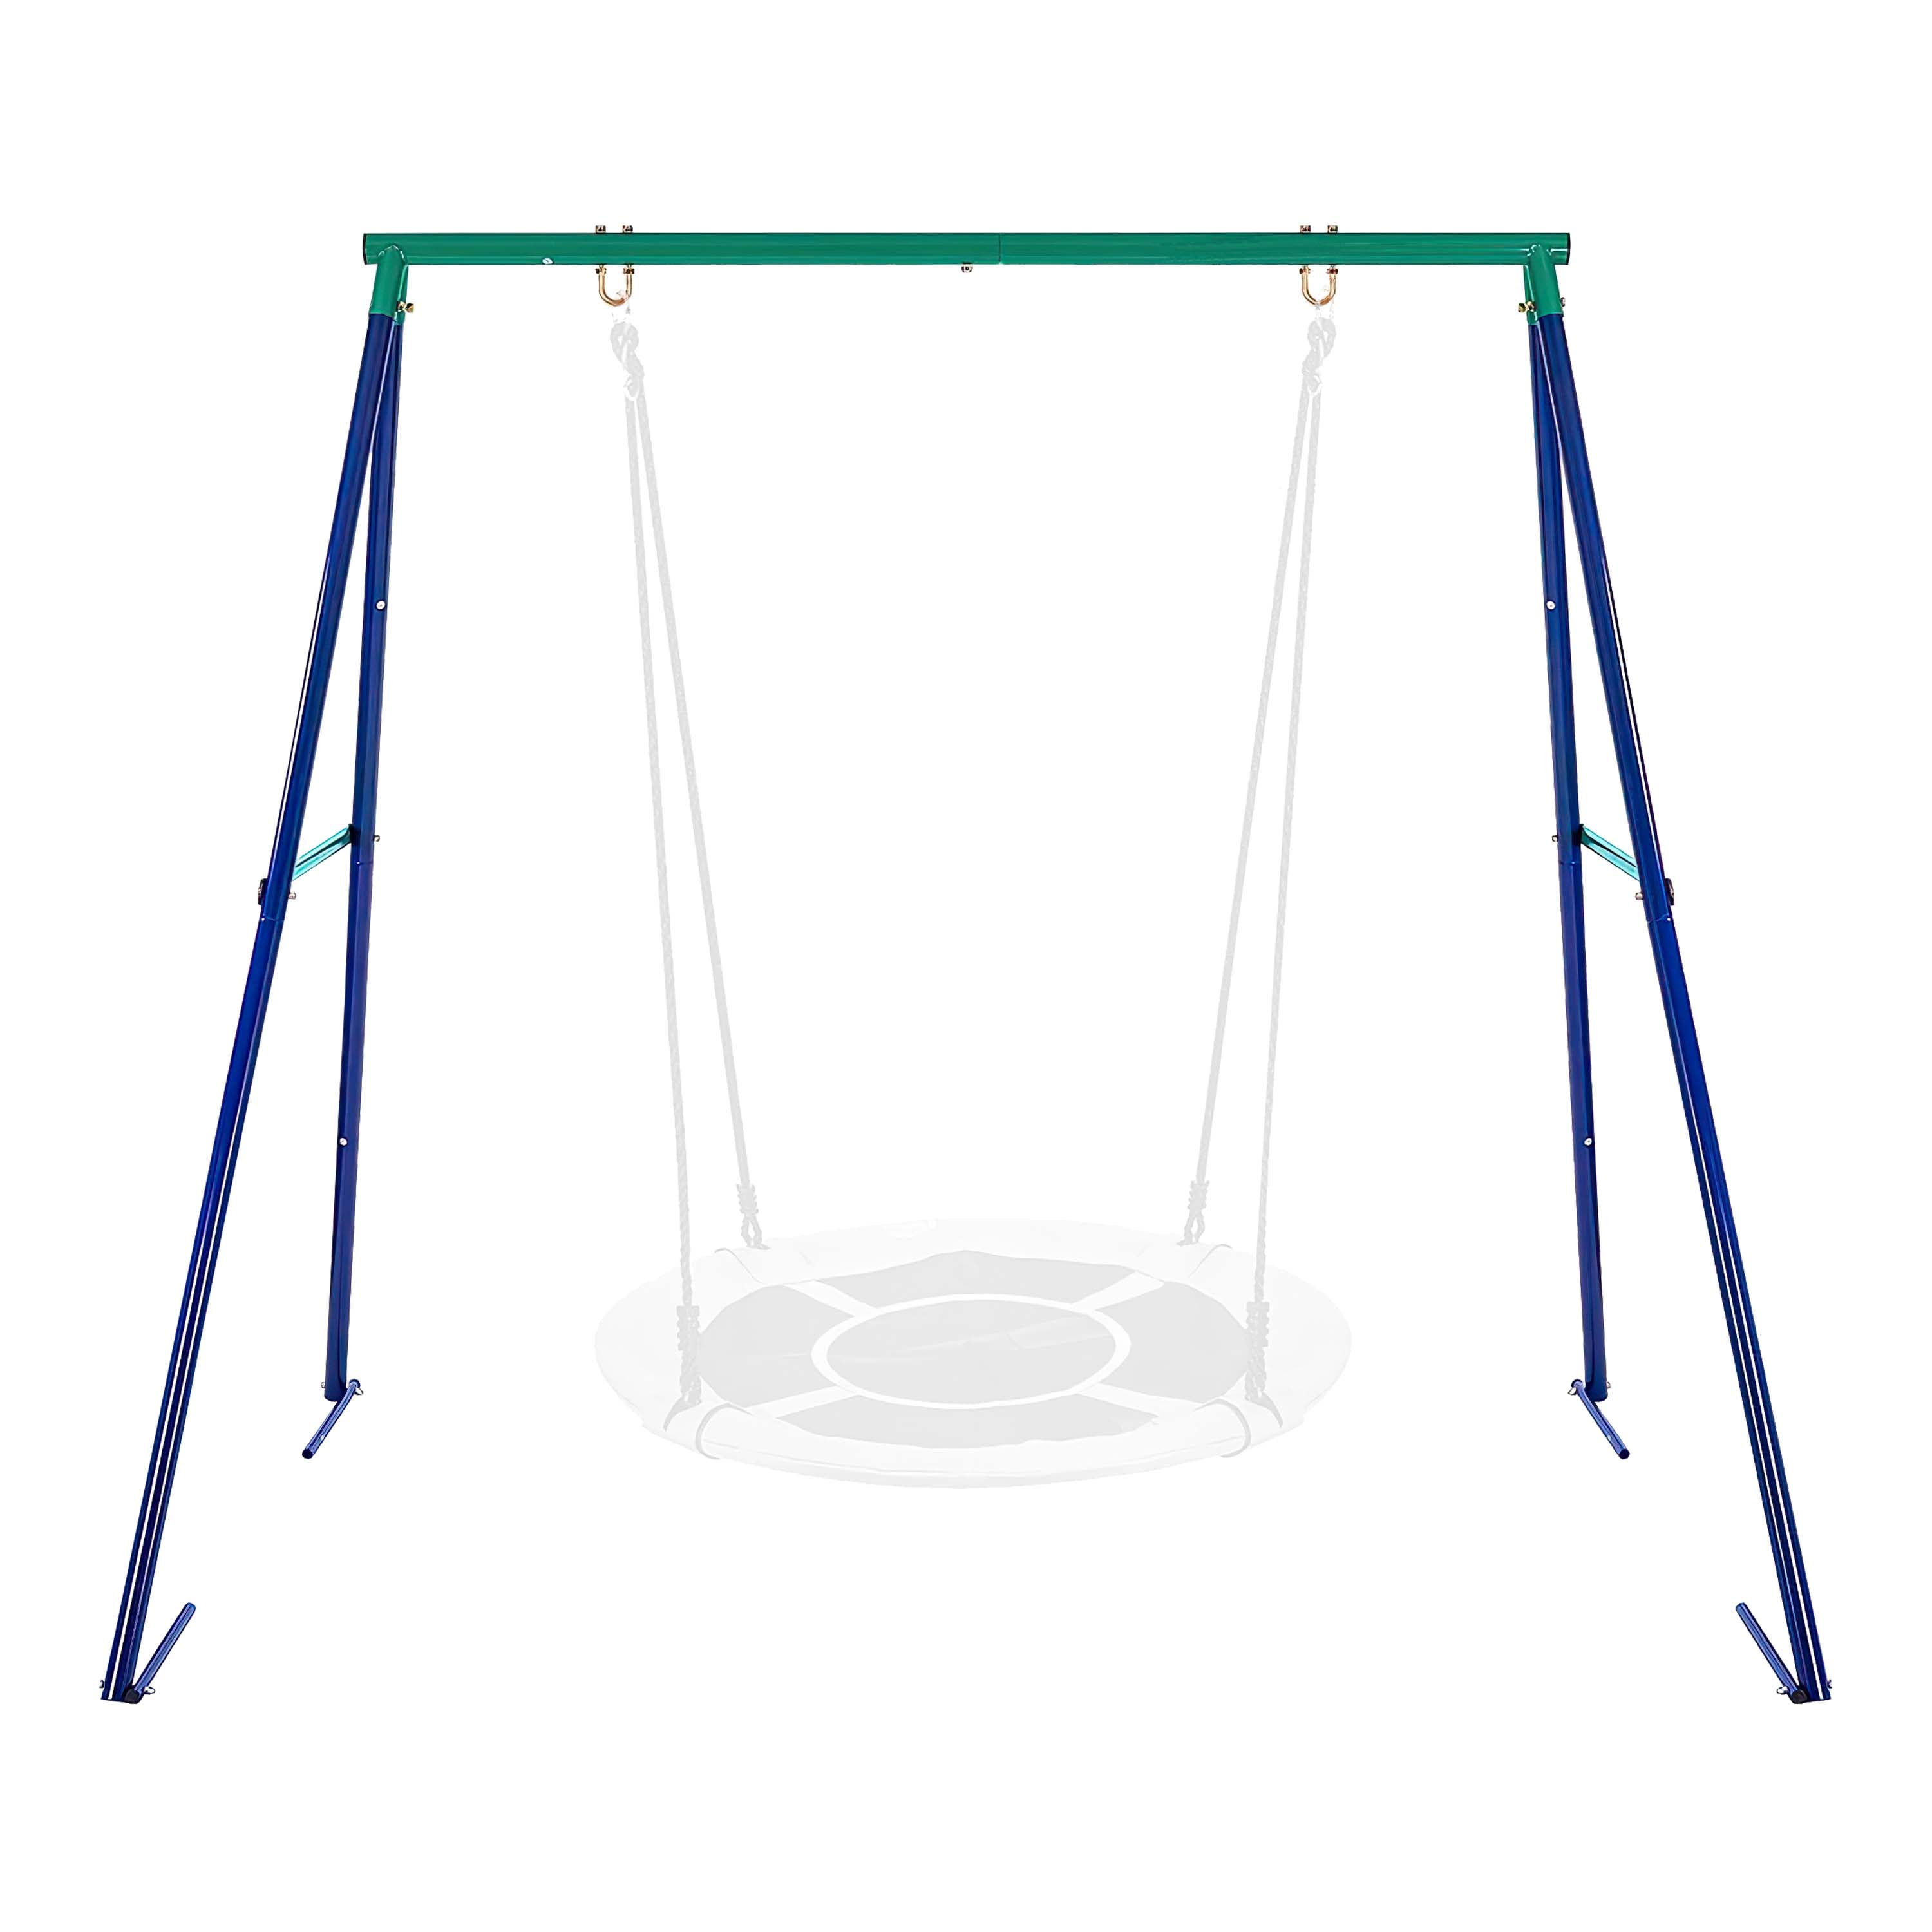 Metal A-Frame Swing Set Frame Stand Fun Play Chair Backyard Home Kids Children 